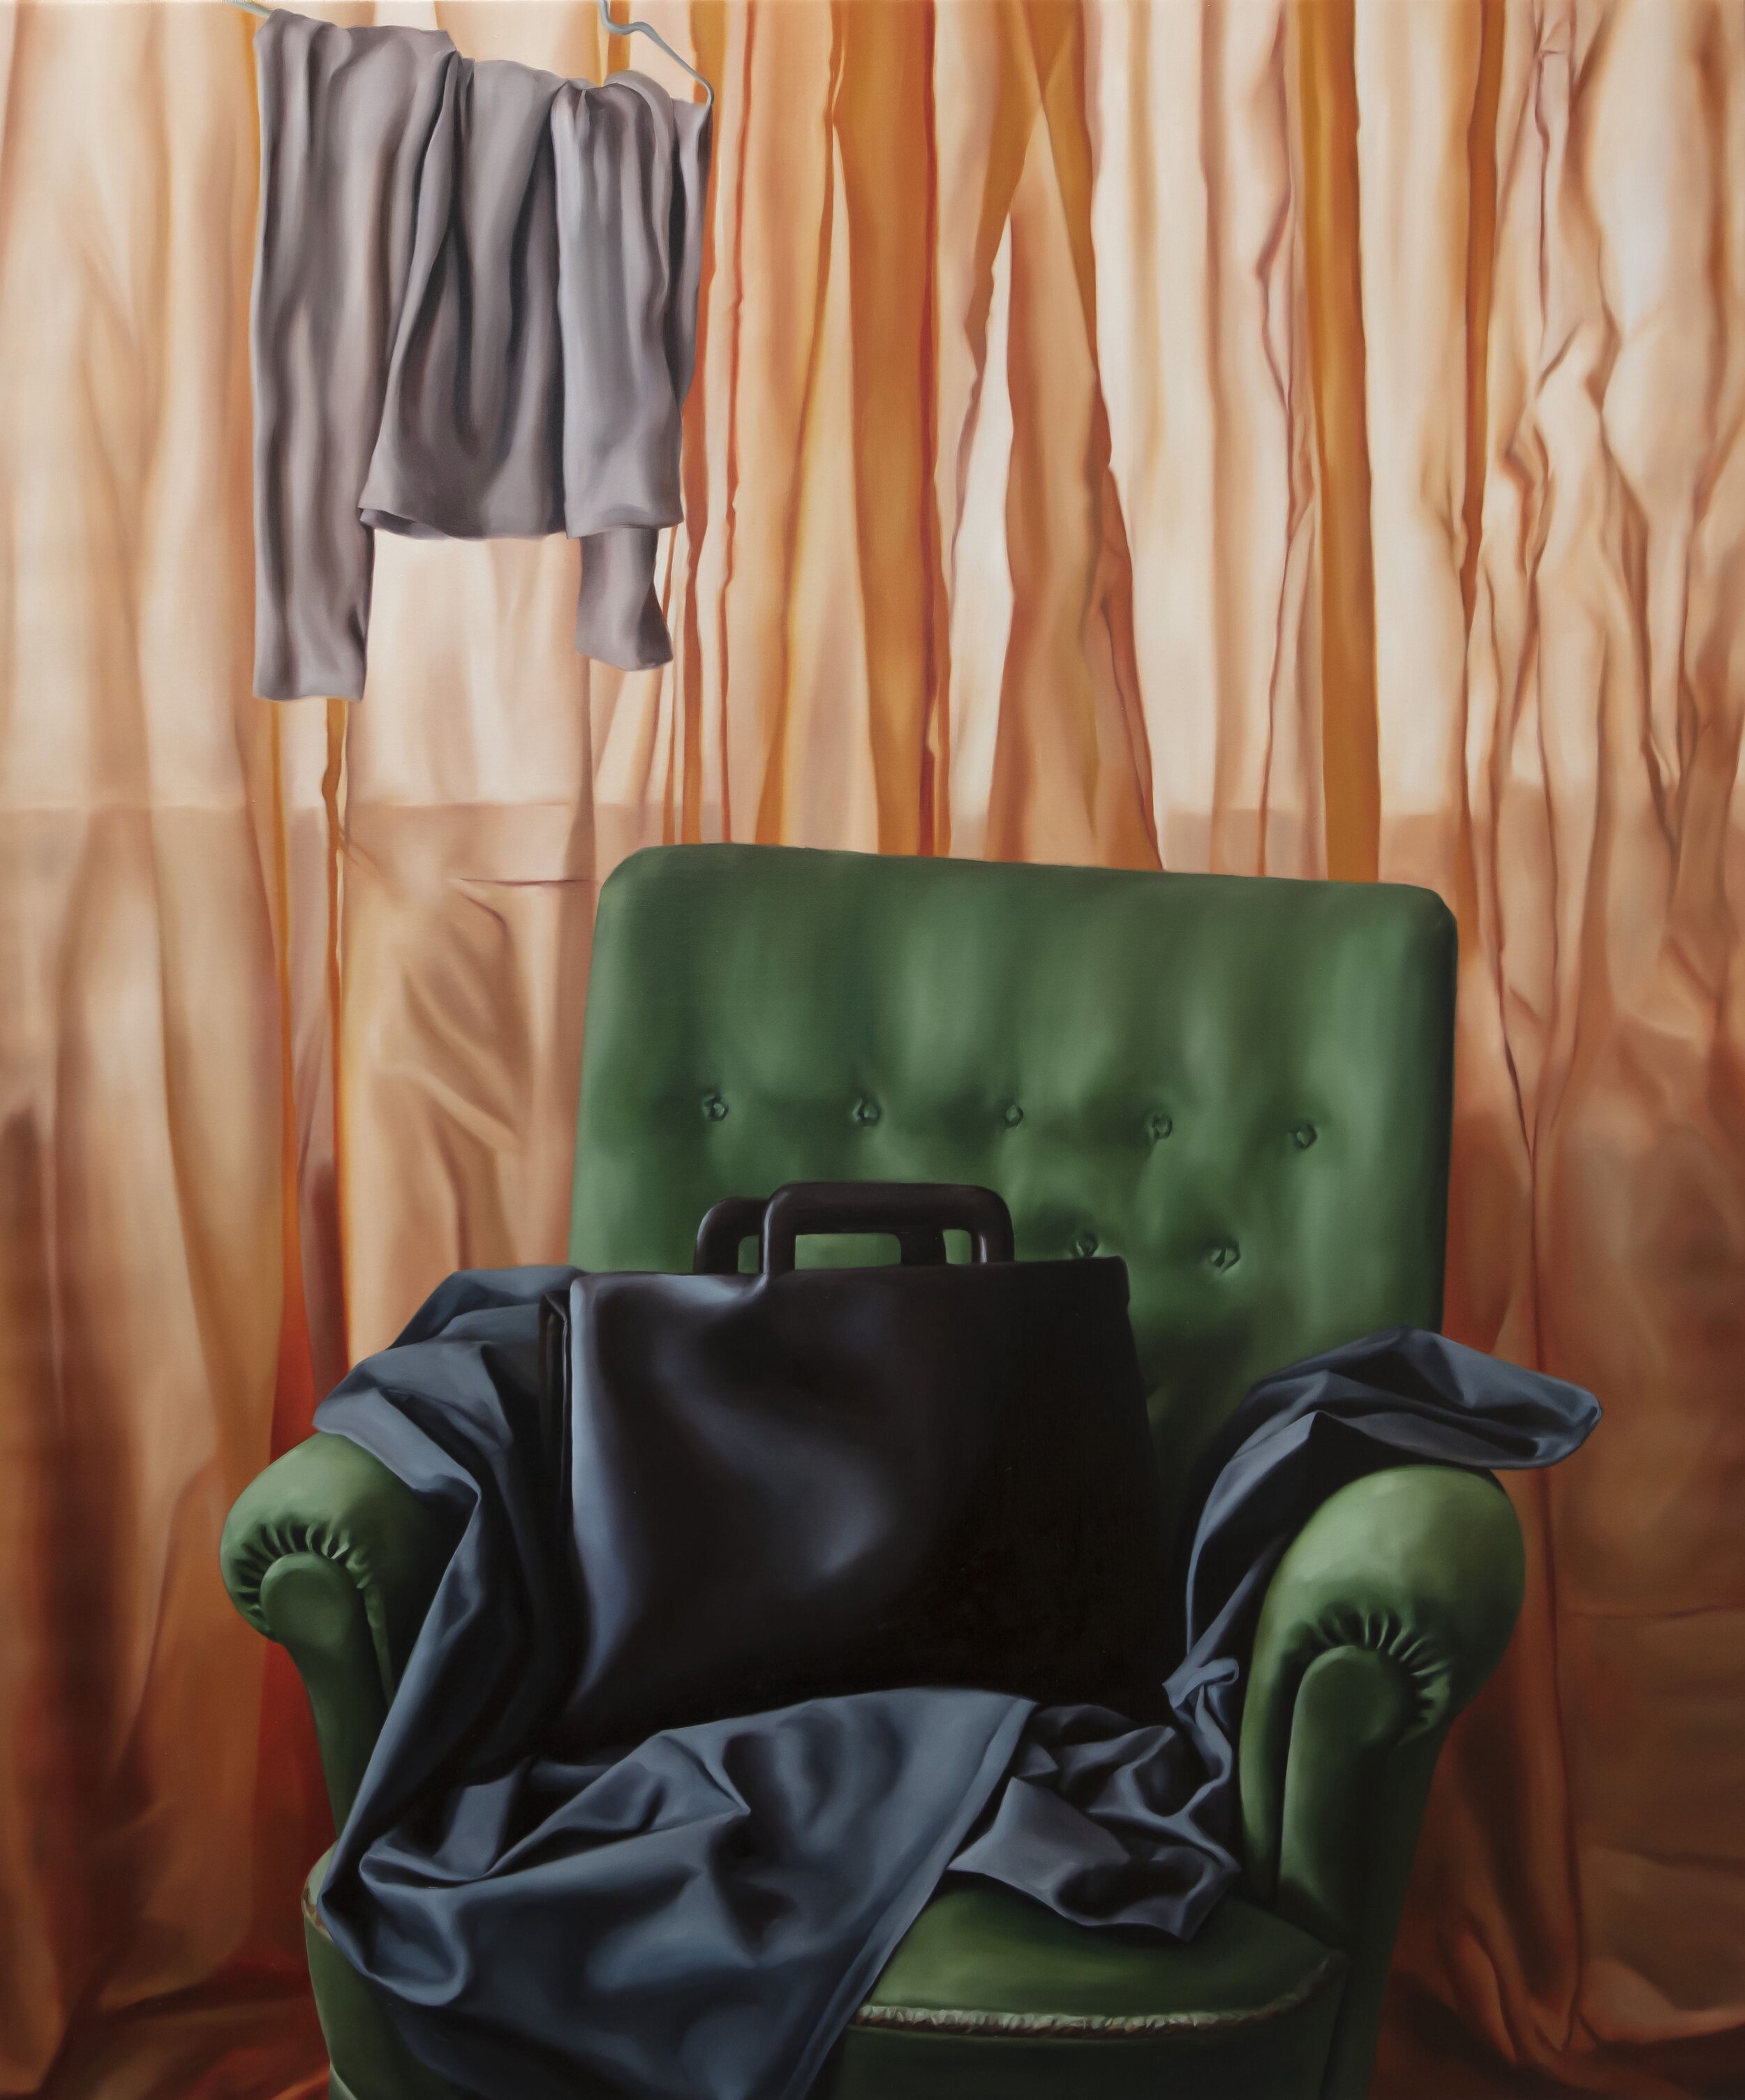 Ebba The waiting room, 100 x 120 cm, oil on canvas, 2019 kopia.jpg